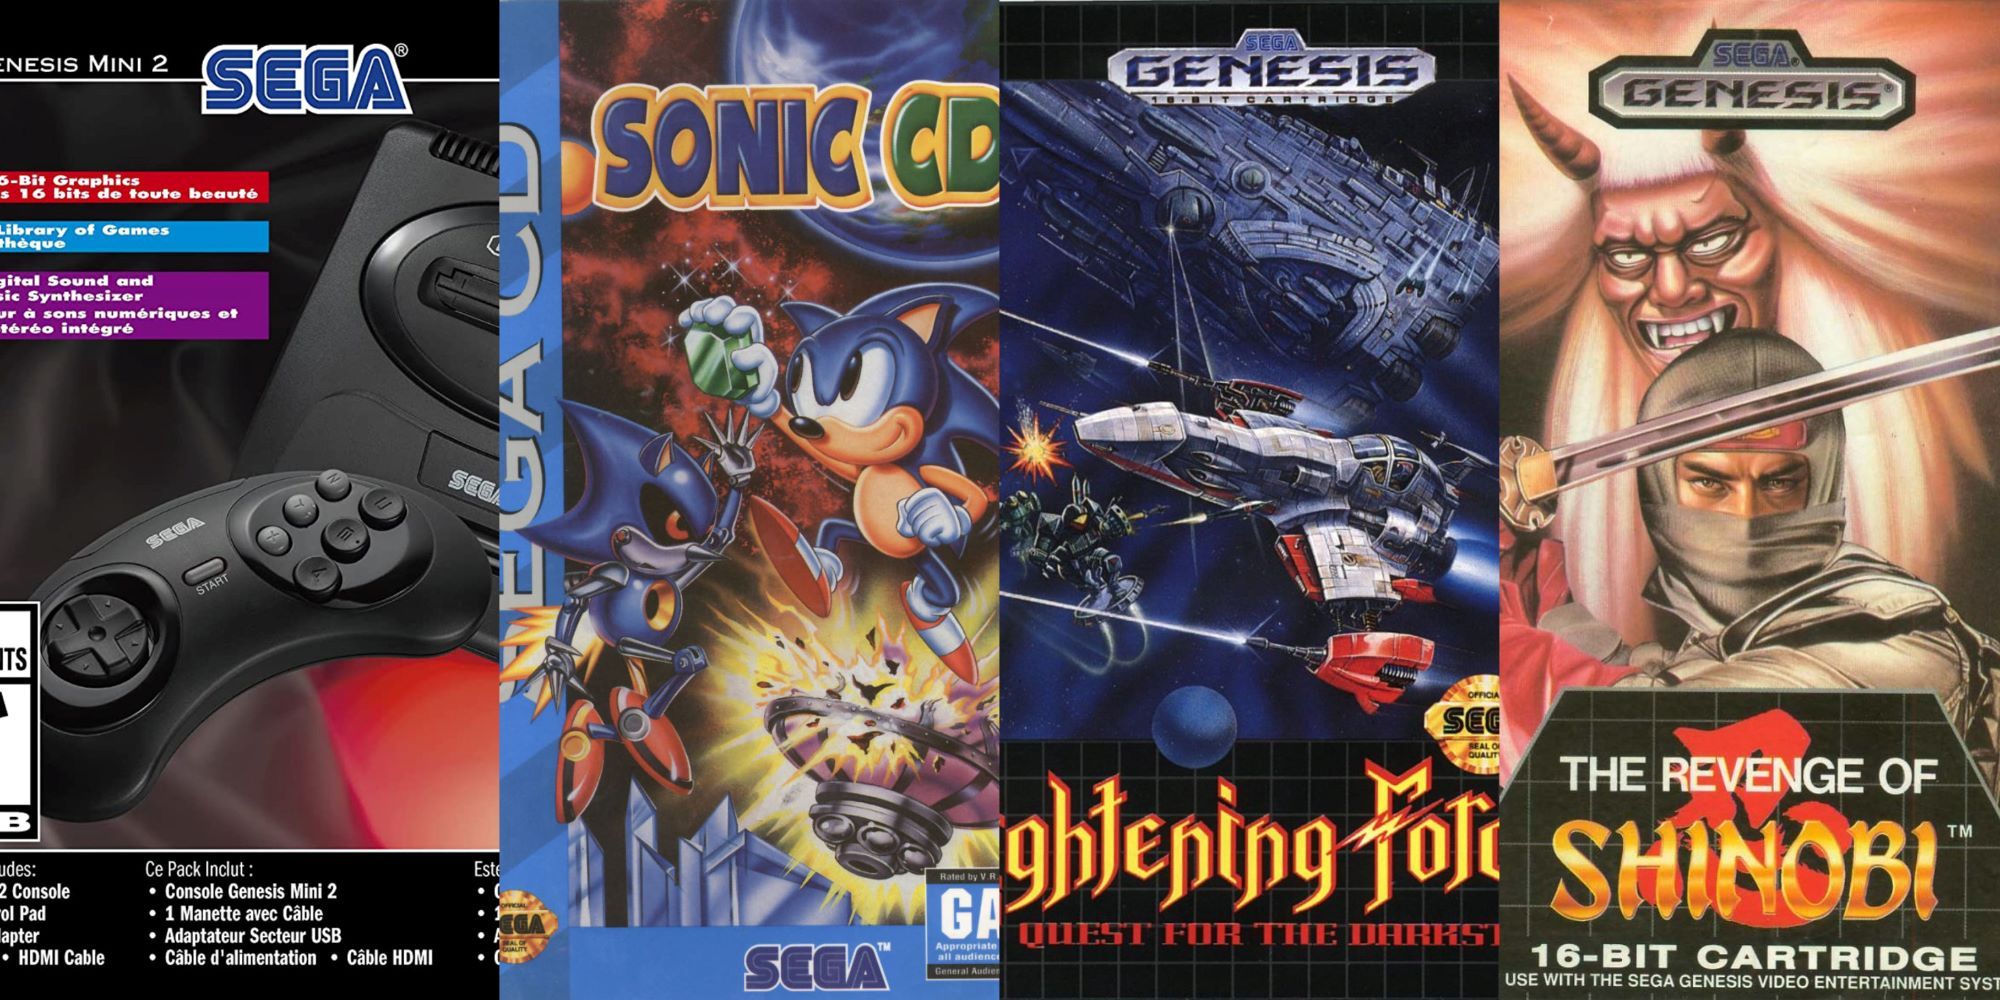 Left - Sega Genesis Mini 2 Box, Left Middle - Sonic CD Box, Right Middle - Lightening Force Box, Right - Revenge of Shinobi Box